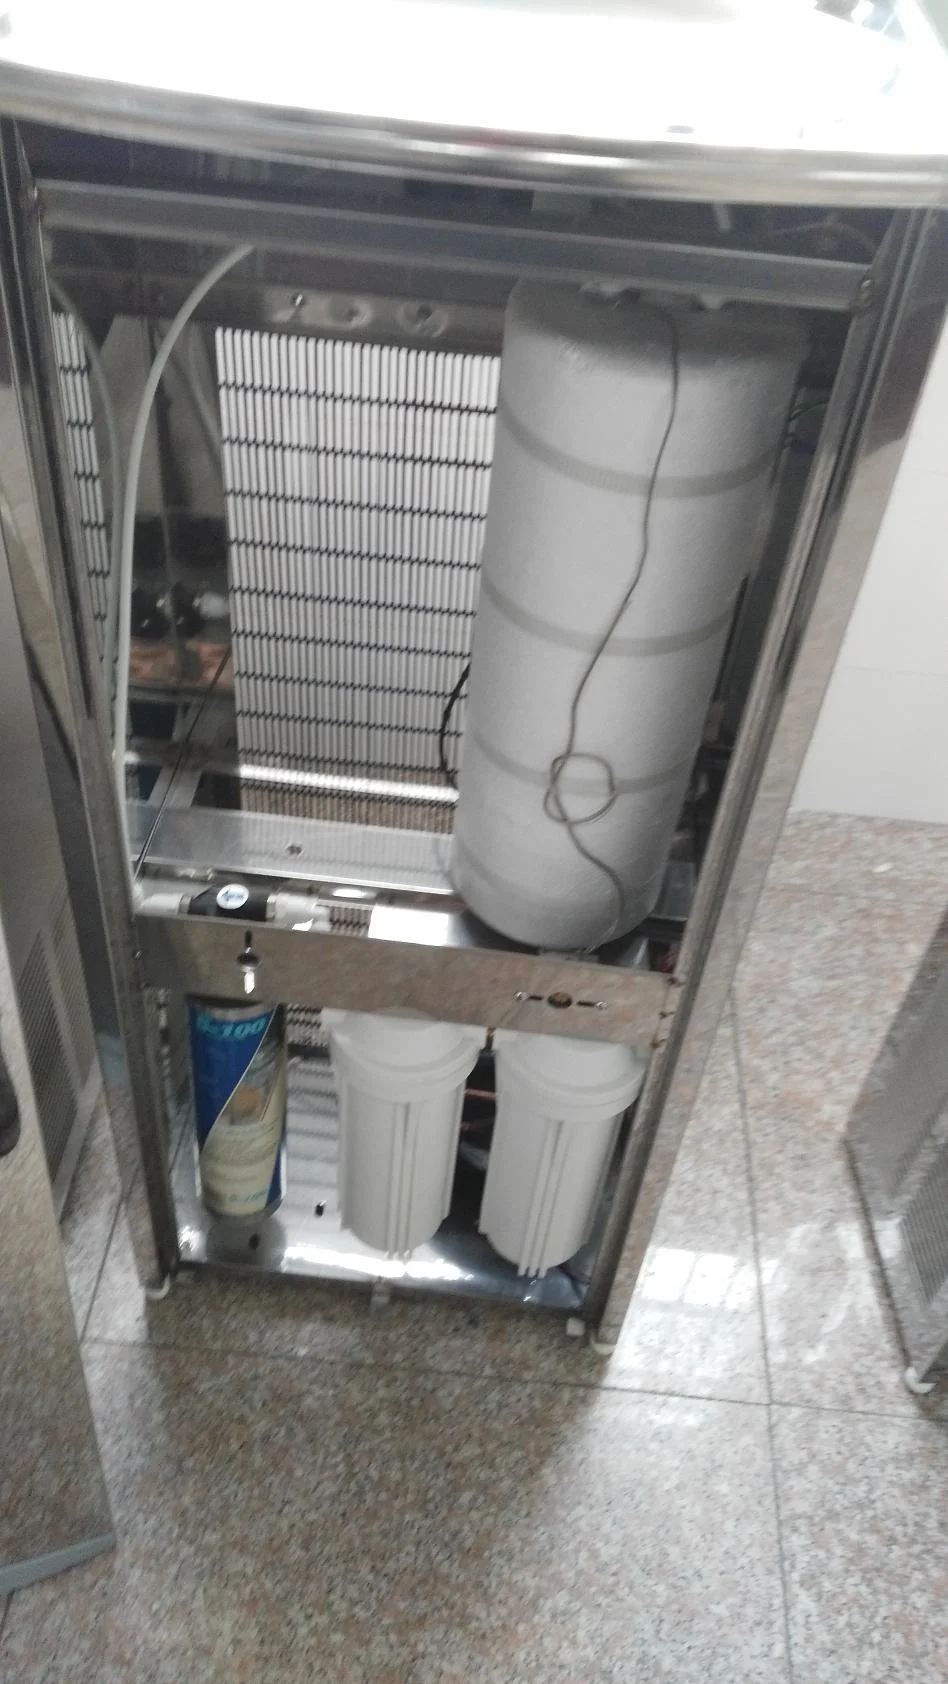 Pou Stainless Steel Water Dispenser (SGRO-3)